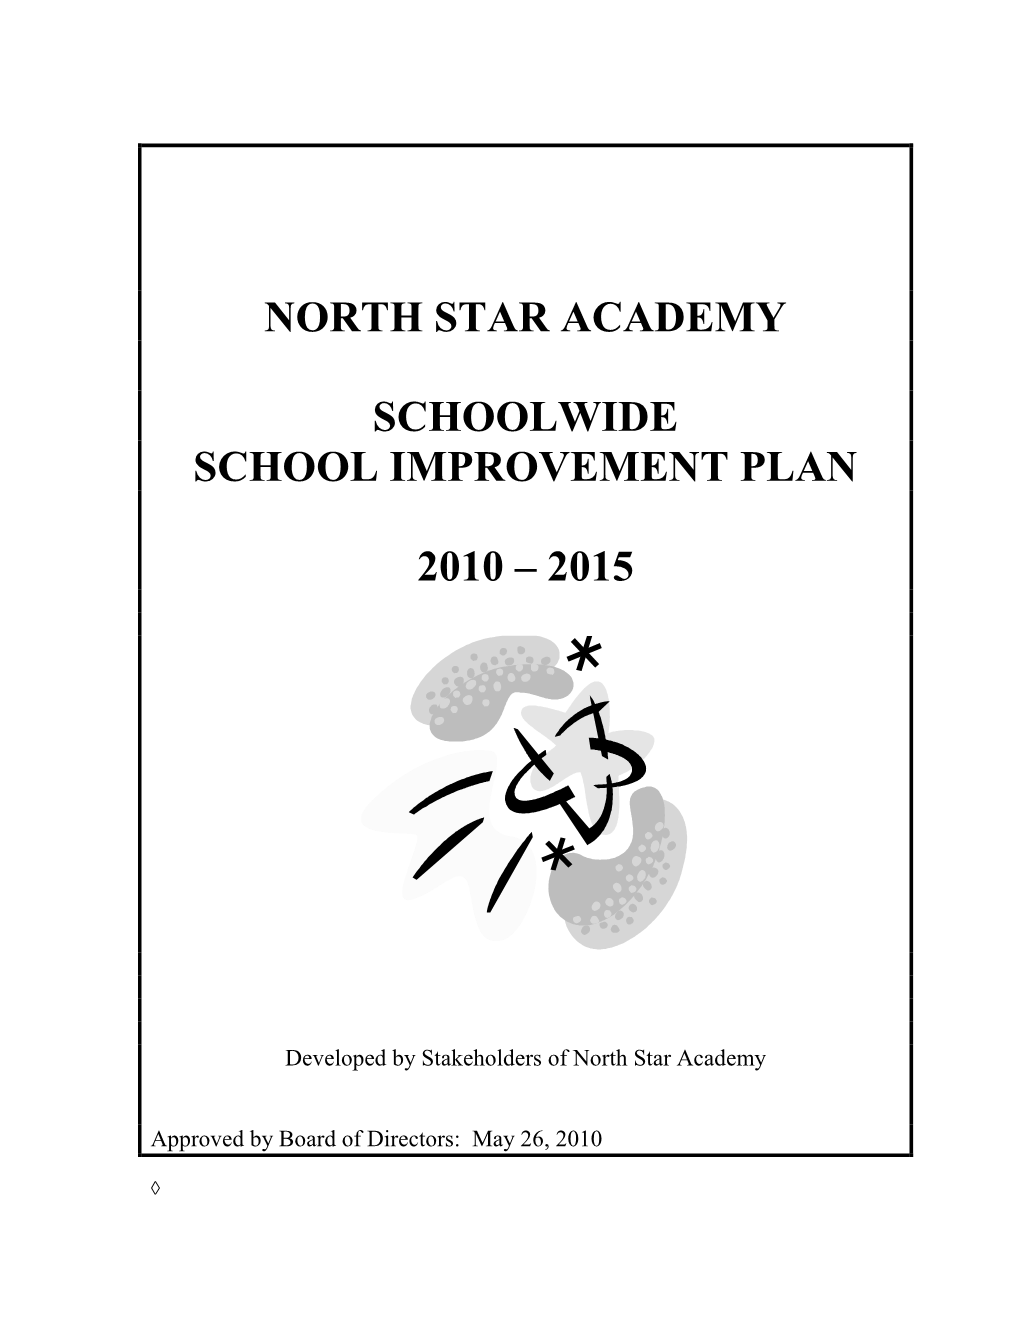 North Star Academy Schoolwide School